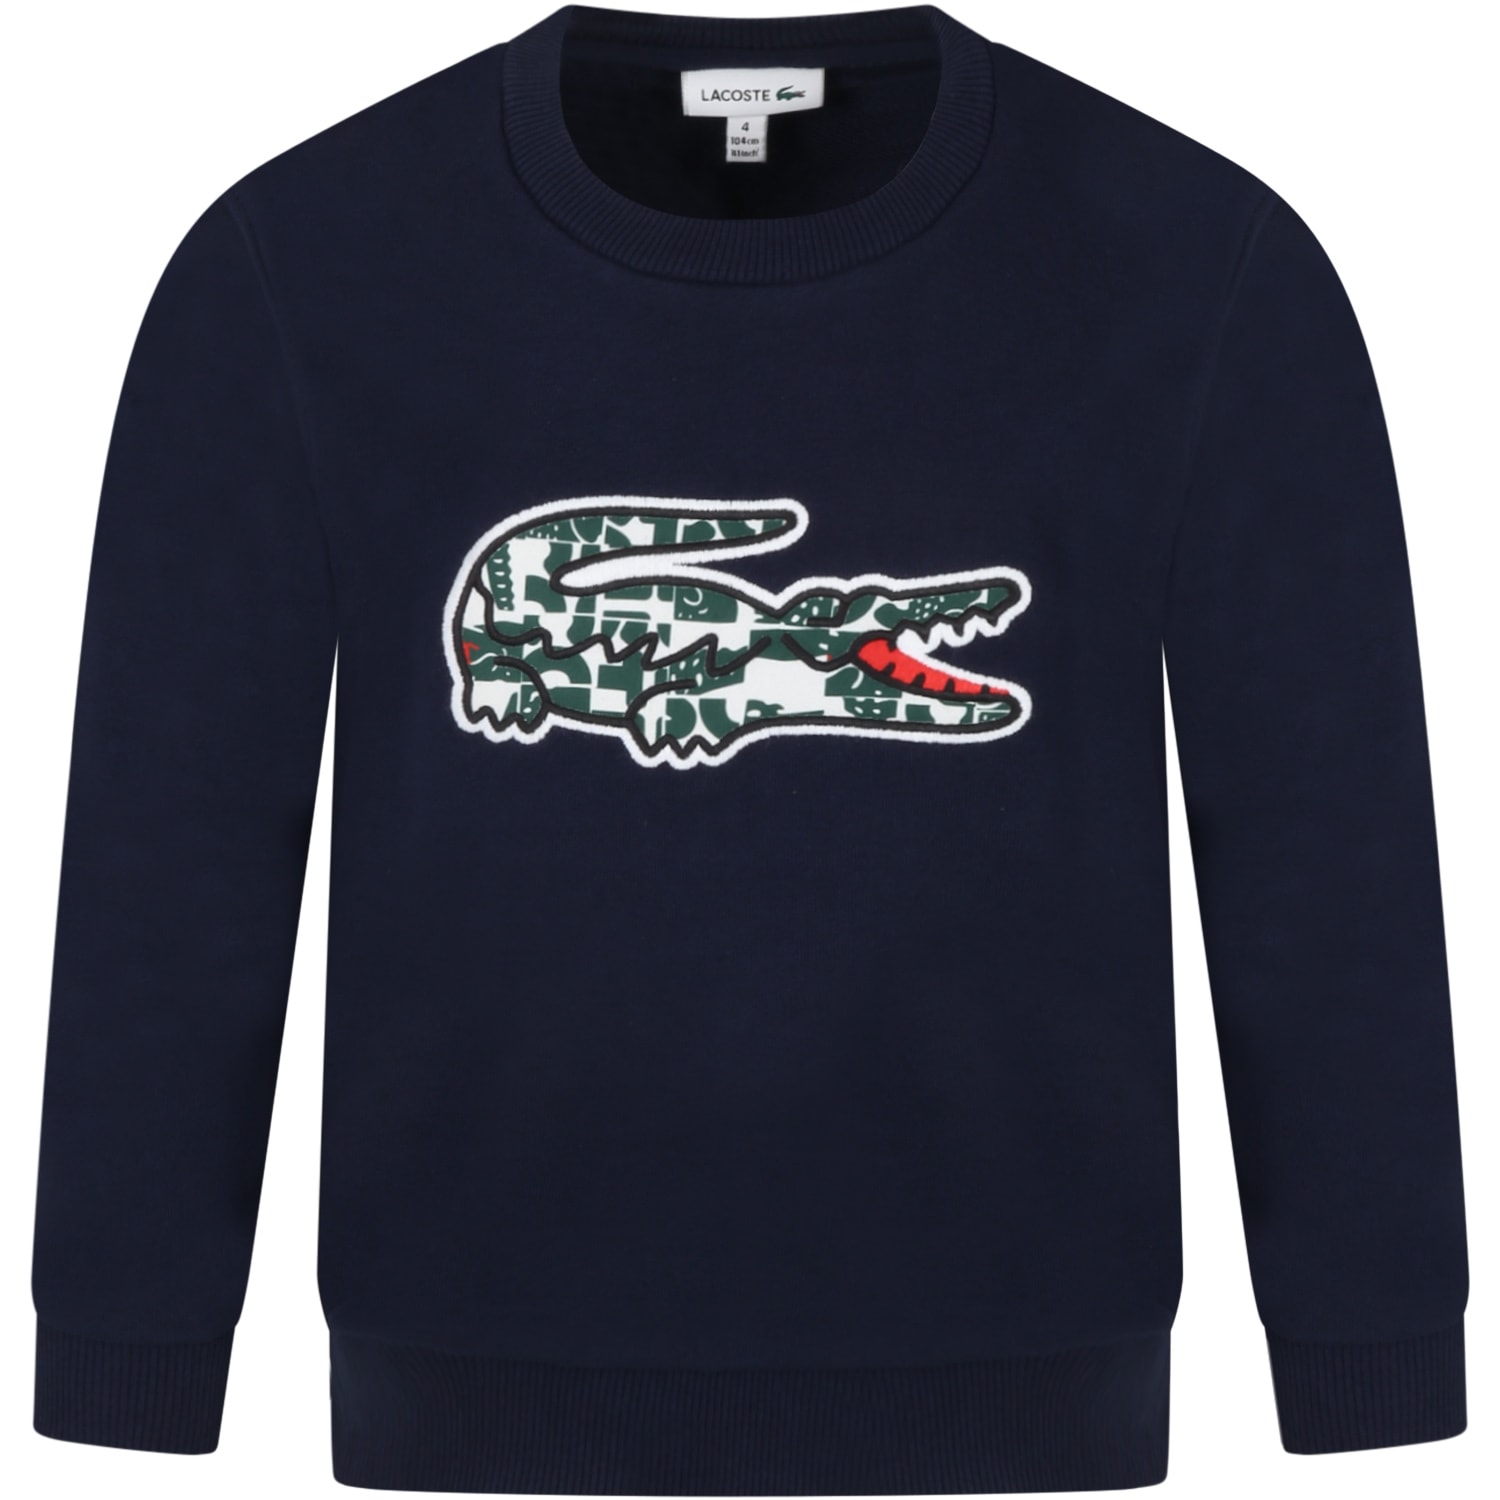 Lacoste Blue Sweatshirt For Boy Crocodile